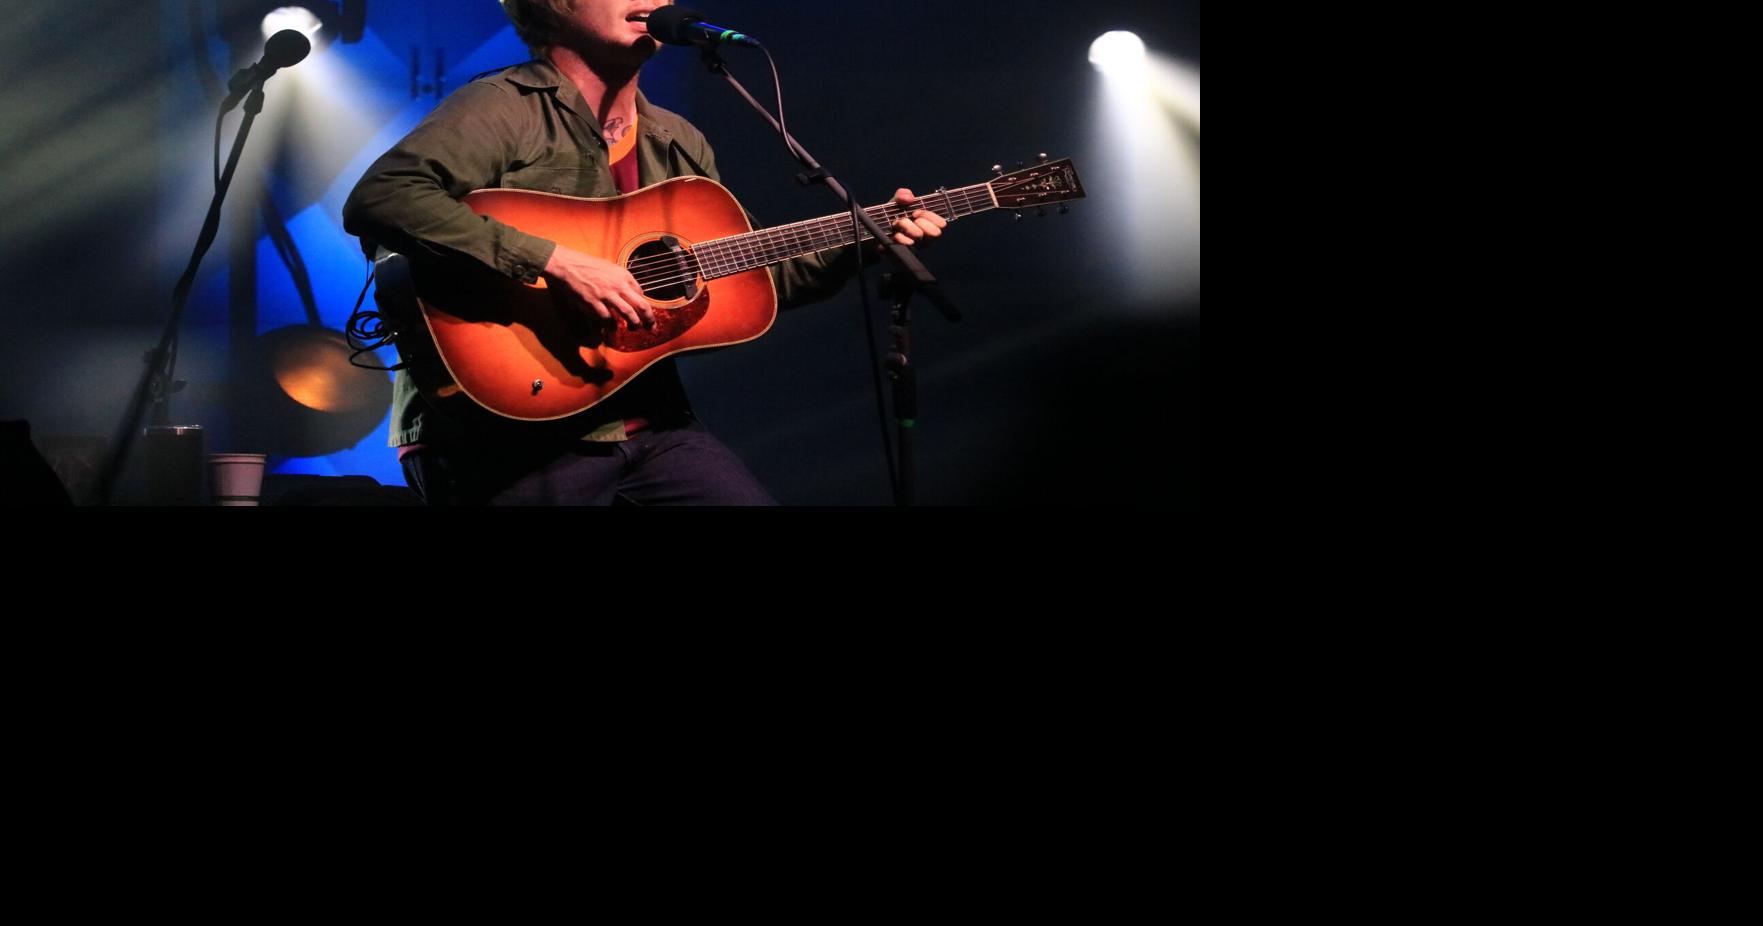 Michiganbred bluegrass guitarist Billy Strings lands two Grammy